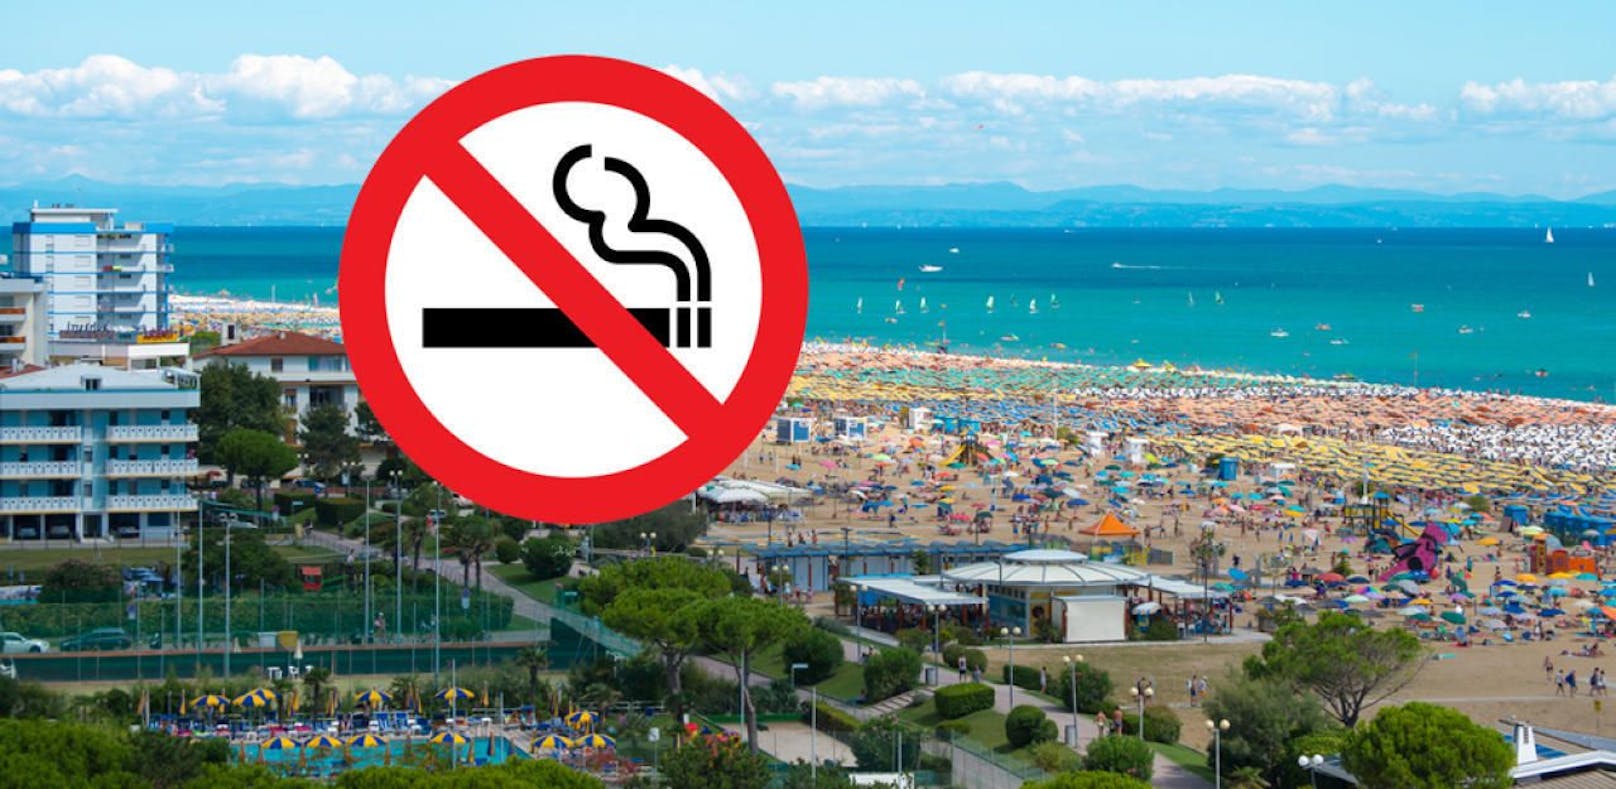 Ab 2018 herrscht am Strand komplettes Rauchverbot.